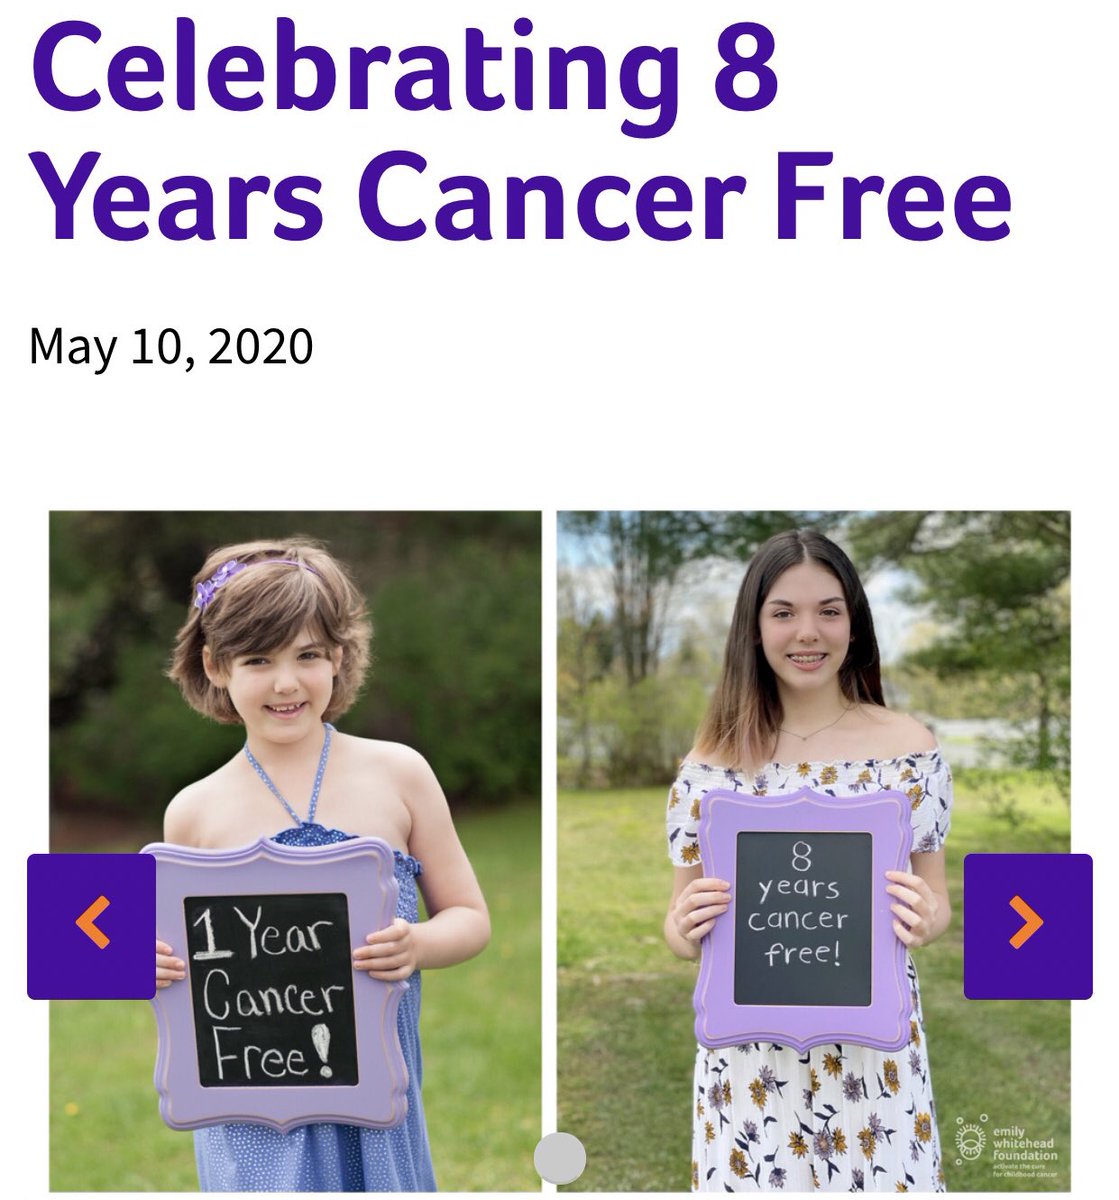 Celebrating 8 Years Cancer Free -   @EWhiteheadFdn 👉🏻 ow.ly/2MRF30qEWB6

#ActivateTheCure for #ChildhoodCancer
#TransformingMedicine